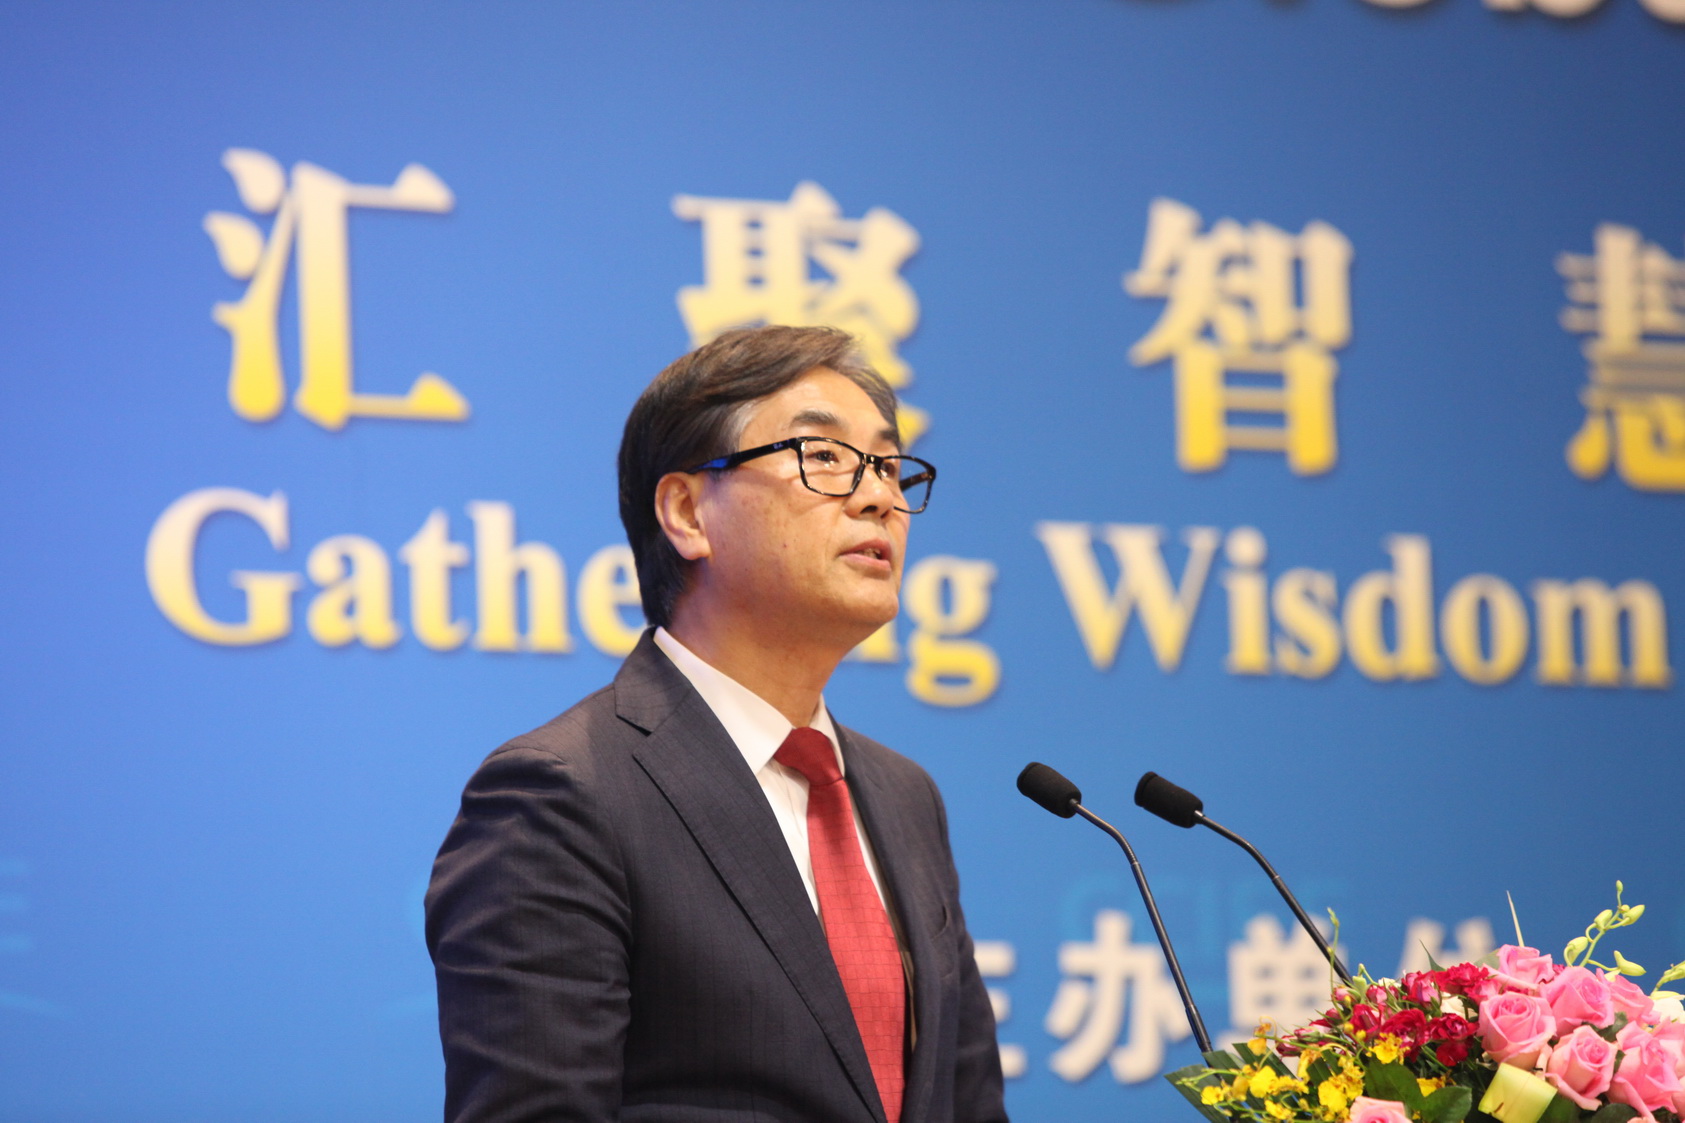 Zhan UNCTAD Director, Investment & Enterprise Division, UNCTAD